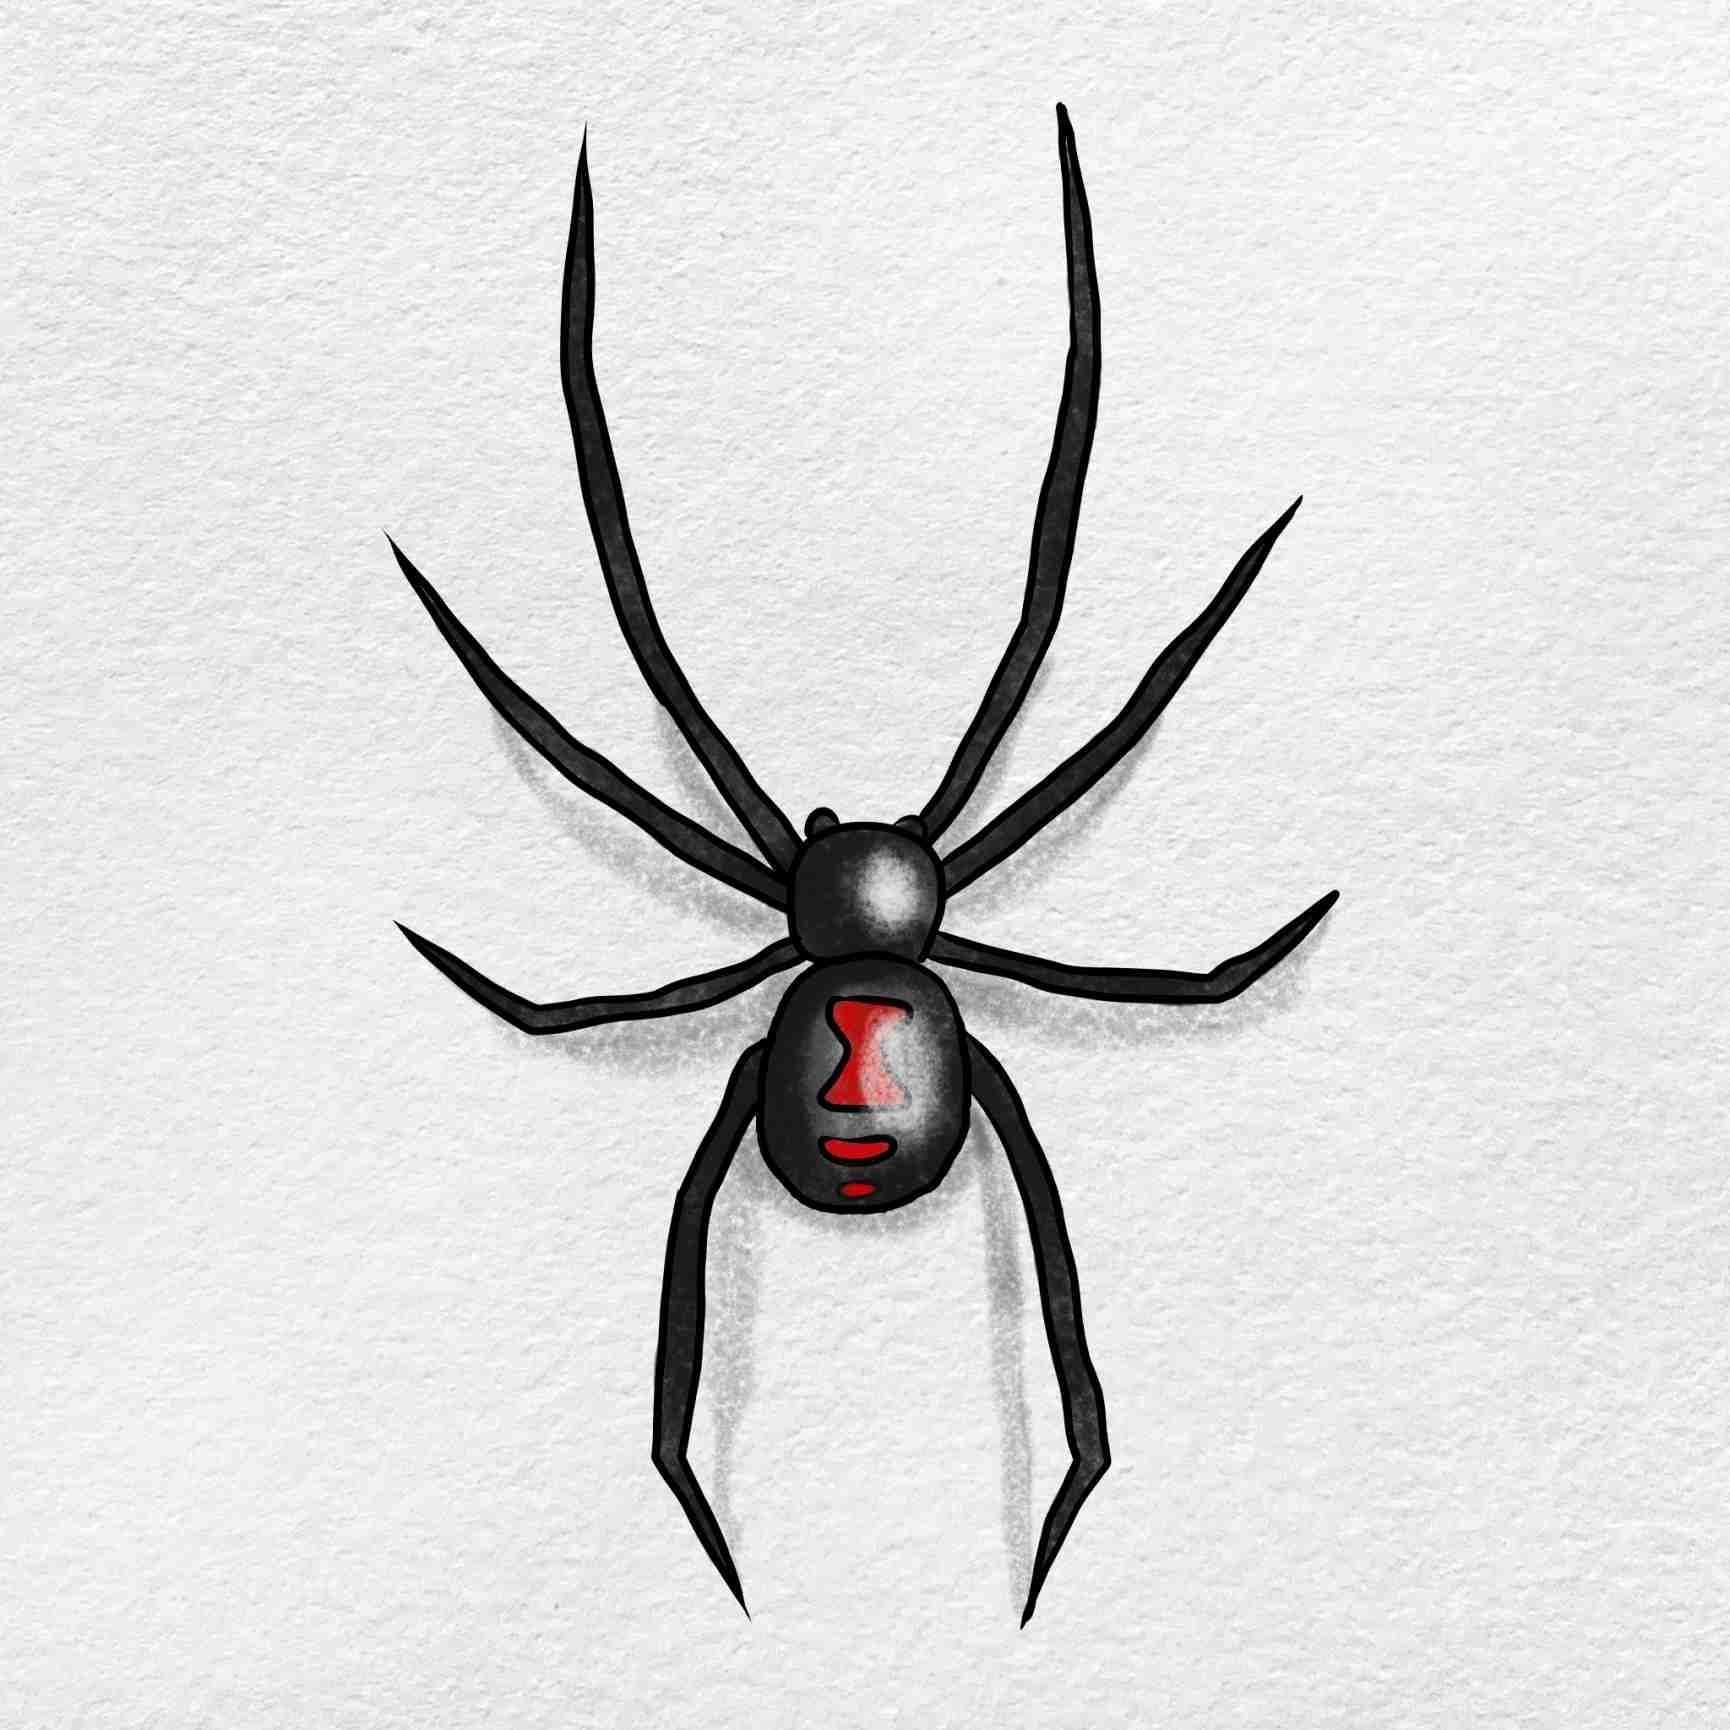 Black Widow Spider Drawing Photo